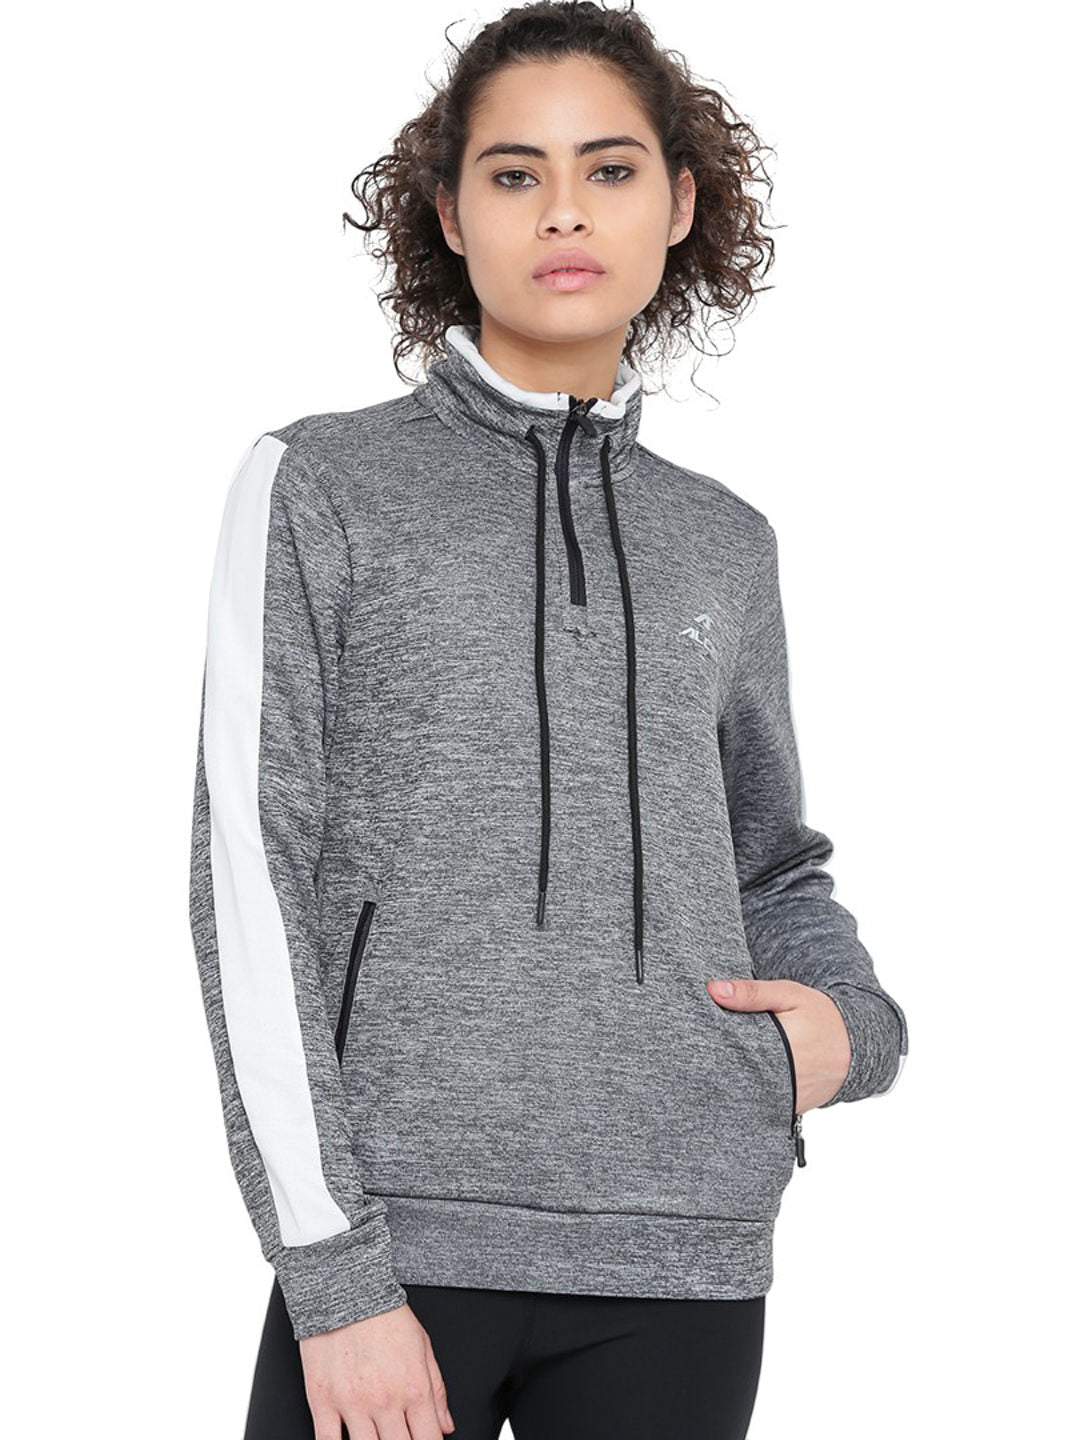 Alcis Women Grey & Black Solid Sweatshirt 236WSS076 236WSS076-S